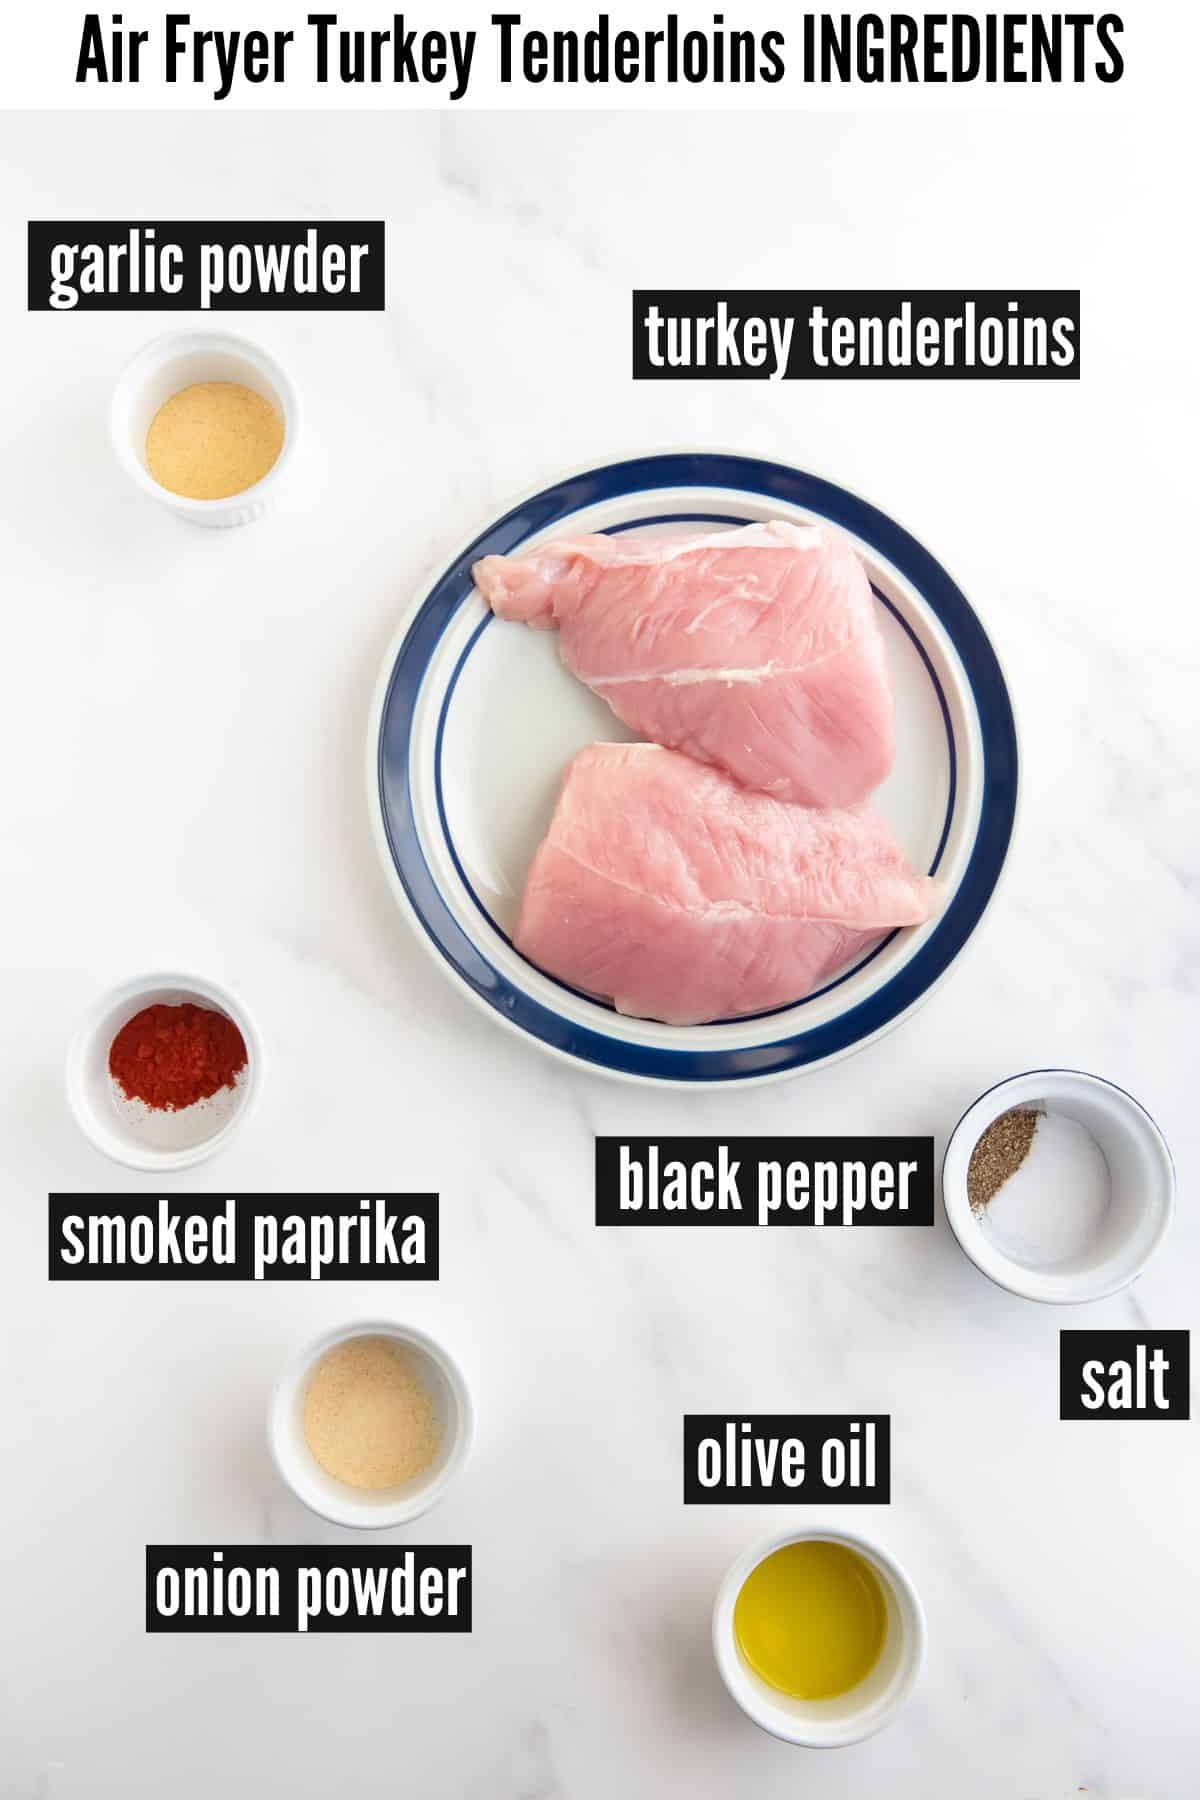 air fryer turkey tenderloins labelled ingredients.